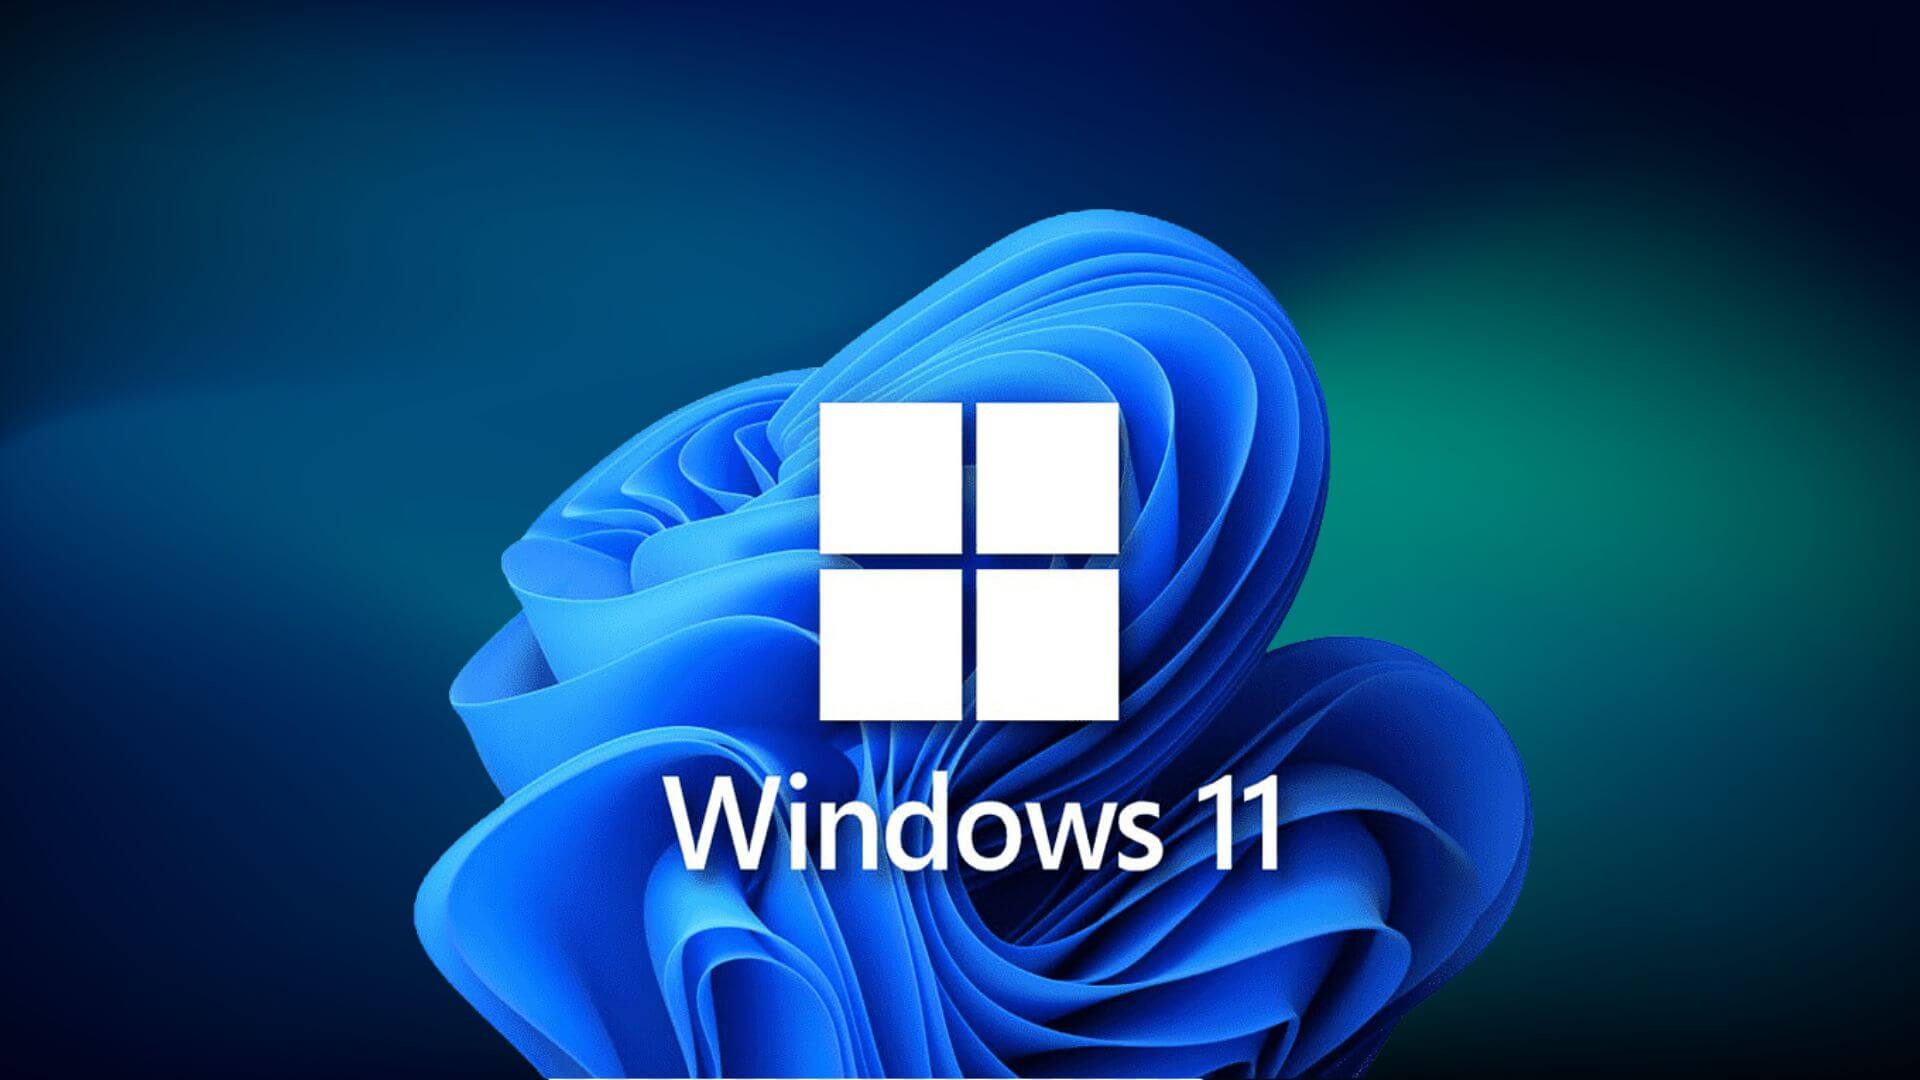  windows 11 operating system